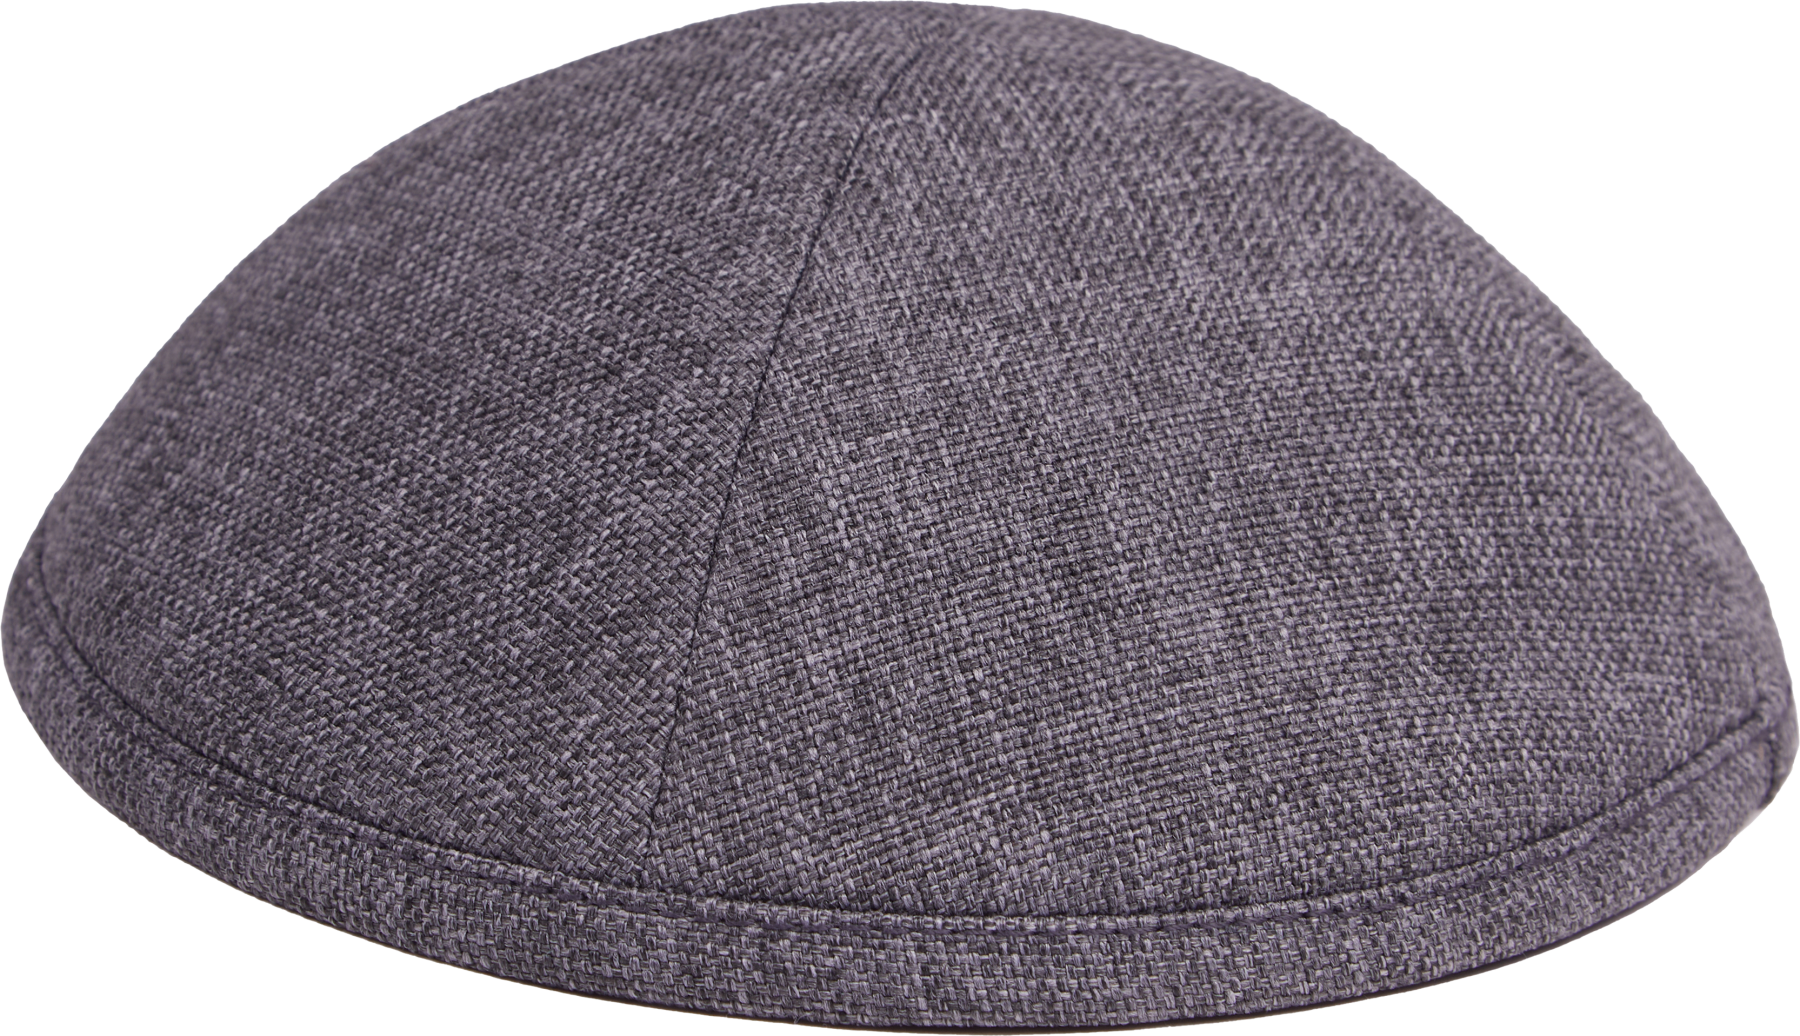 Kippah of dark gray hessian fabric